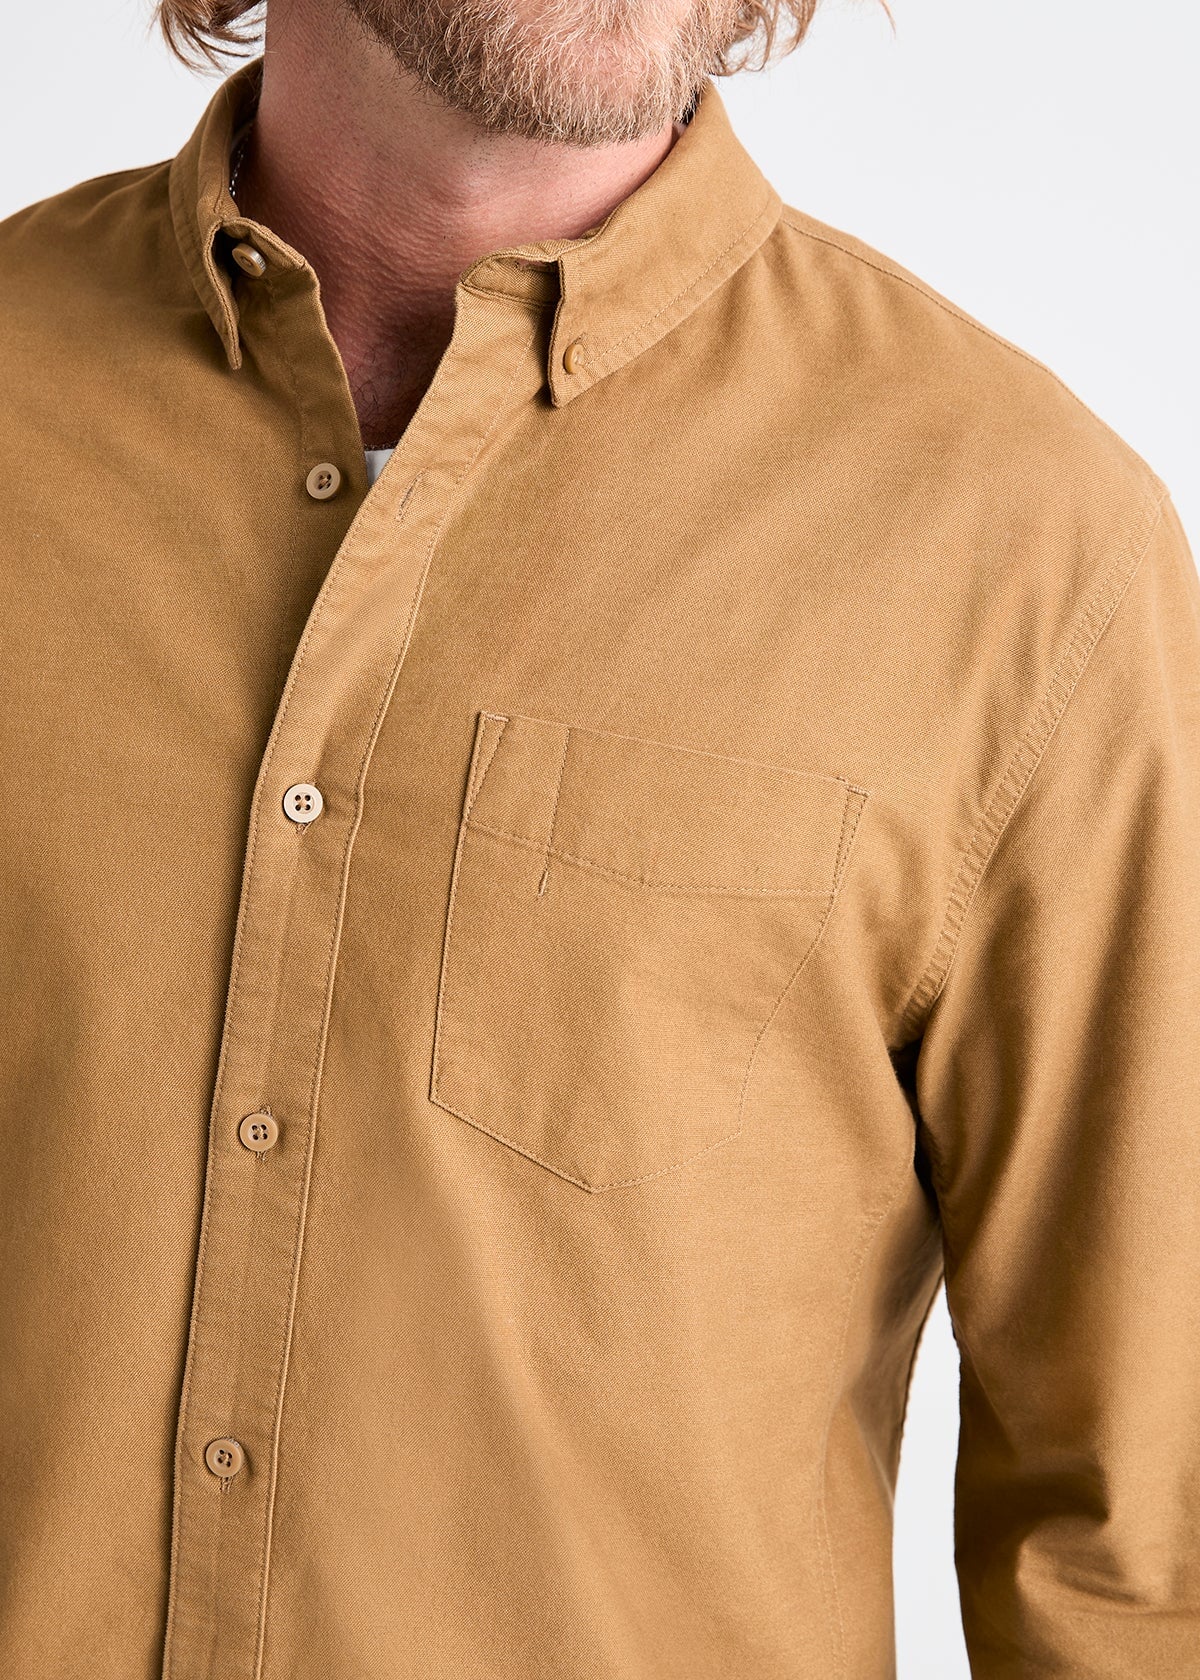 mens khaki stretch button down shirt chest pocket detail